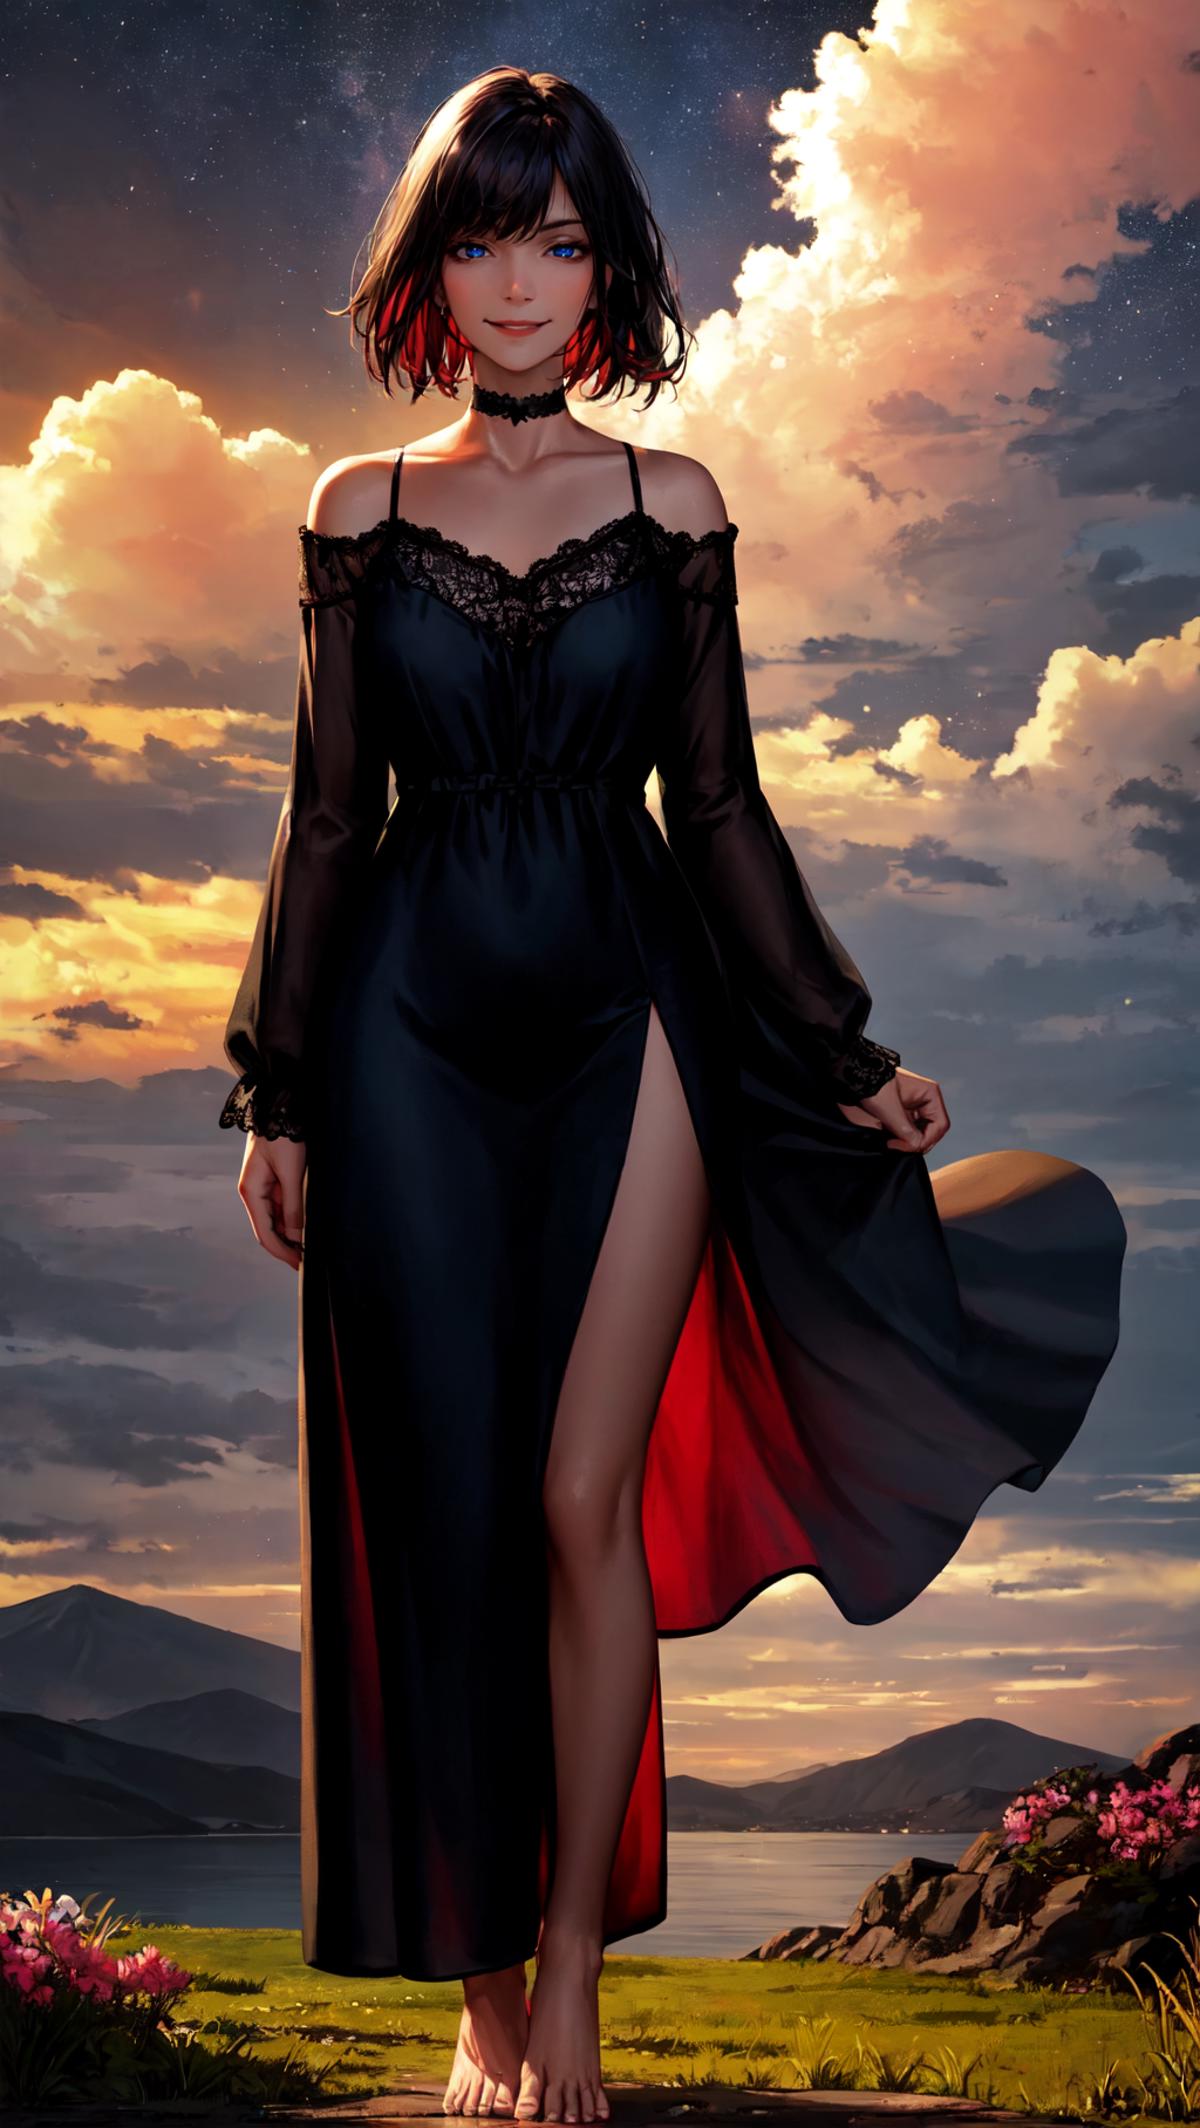 【Costume】【Cosplay】Black Nightgown of Lila Decyrus (Moonlight Encounter) 莉拉·德西亚斯同款睡袍 image by 01HHHH10